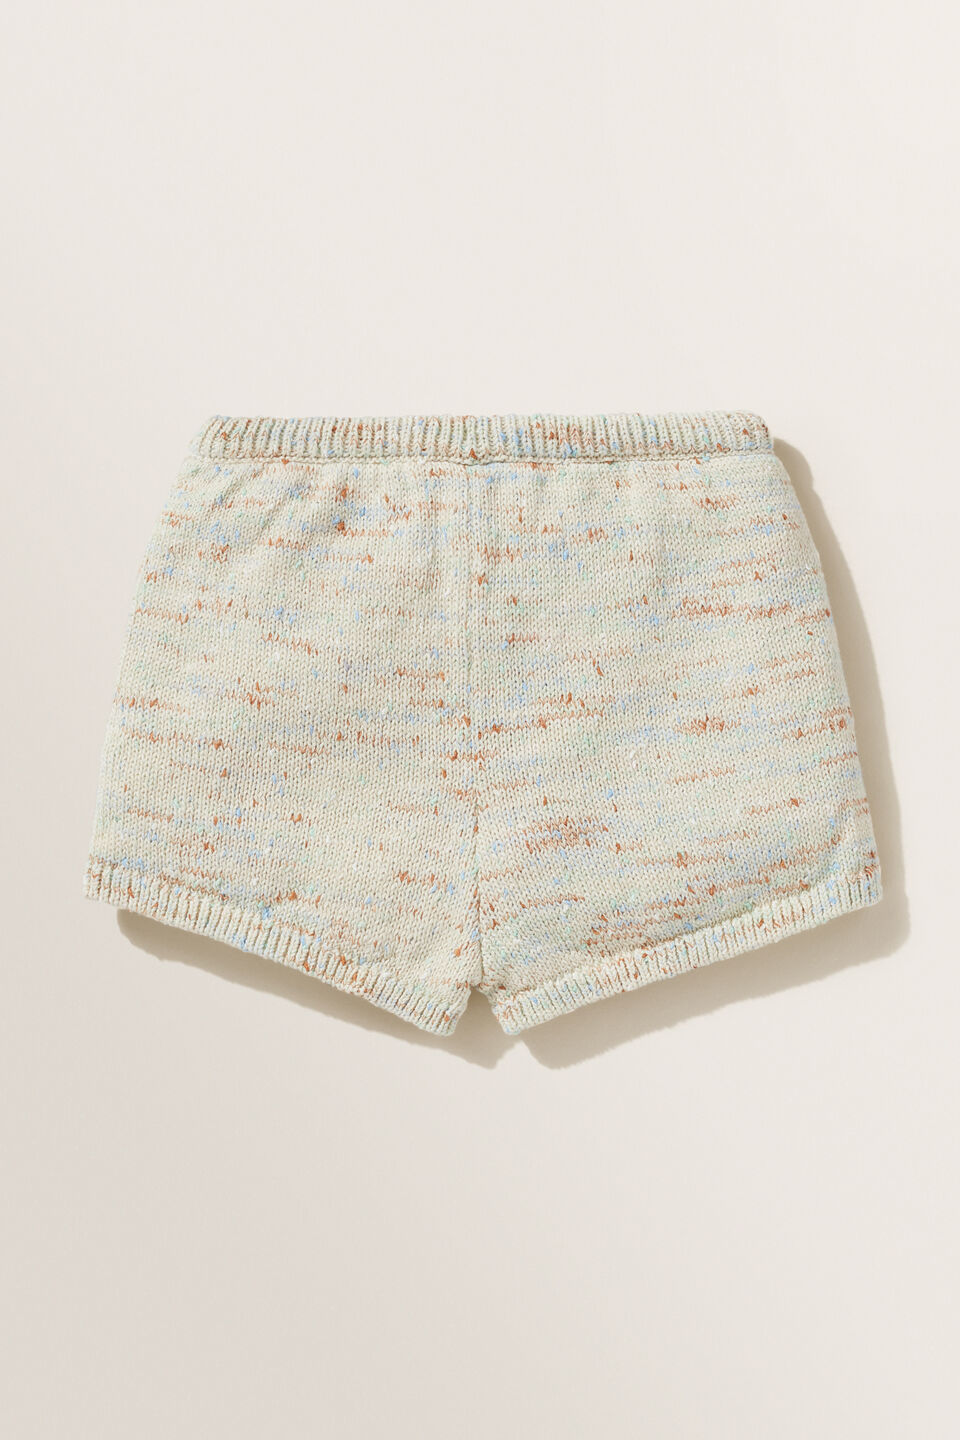 Speckle Knit Shorts  Multi  hi-res